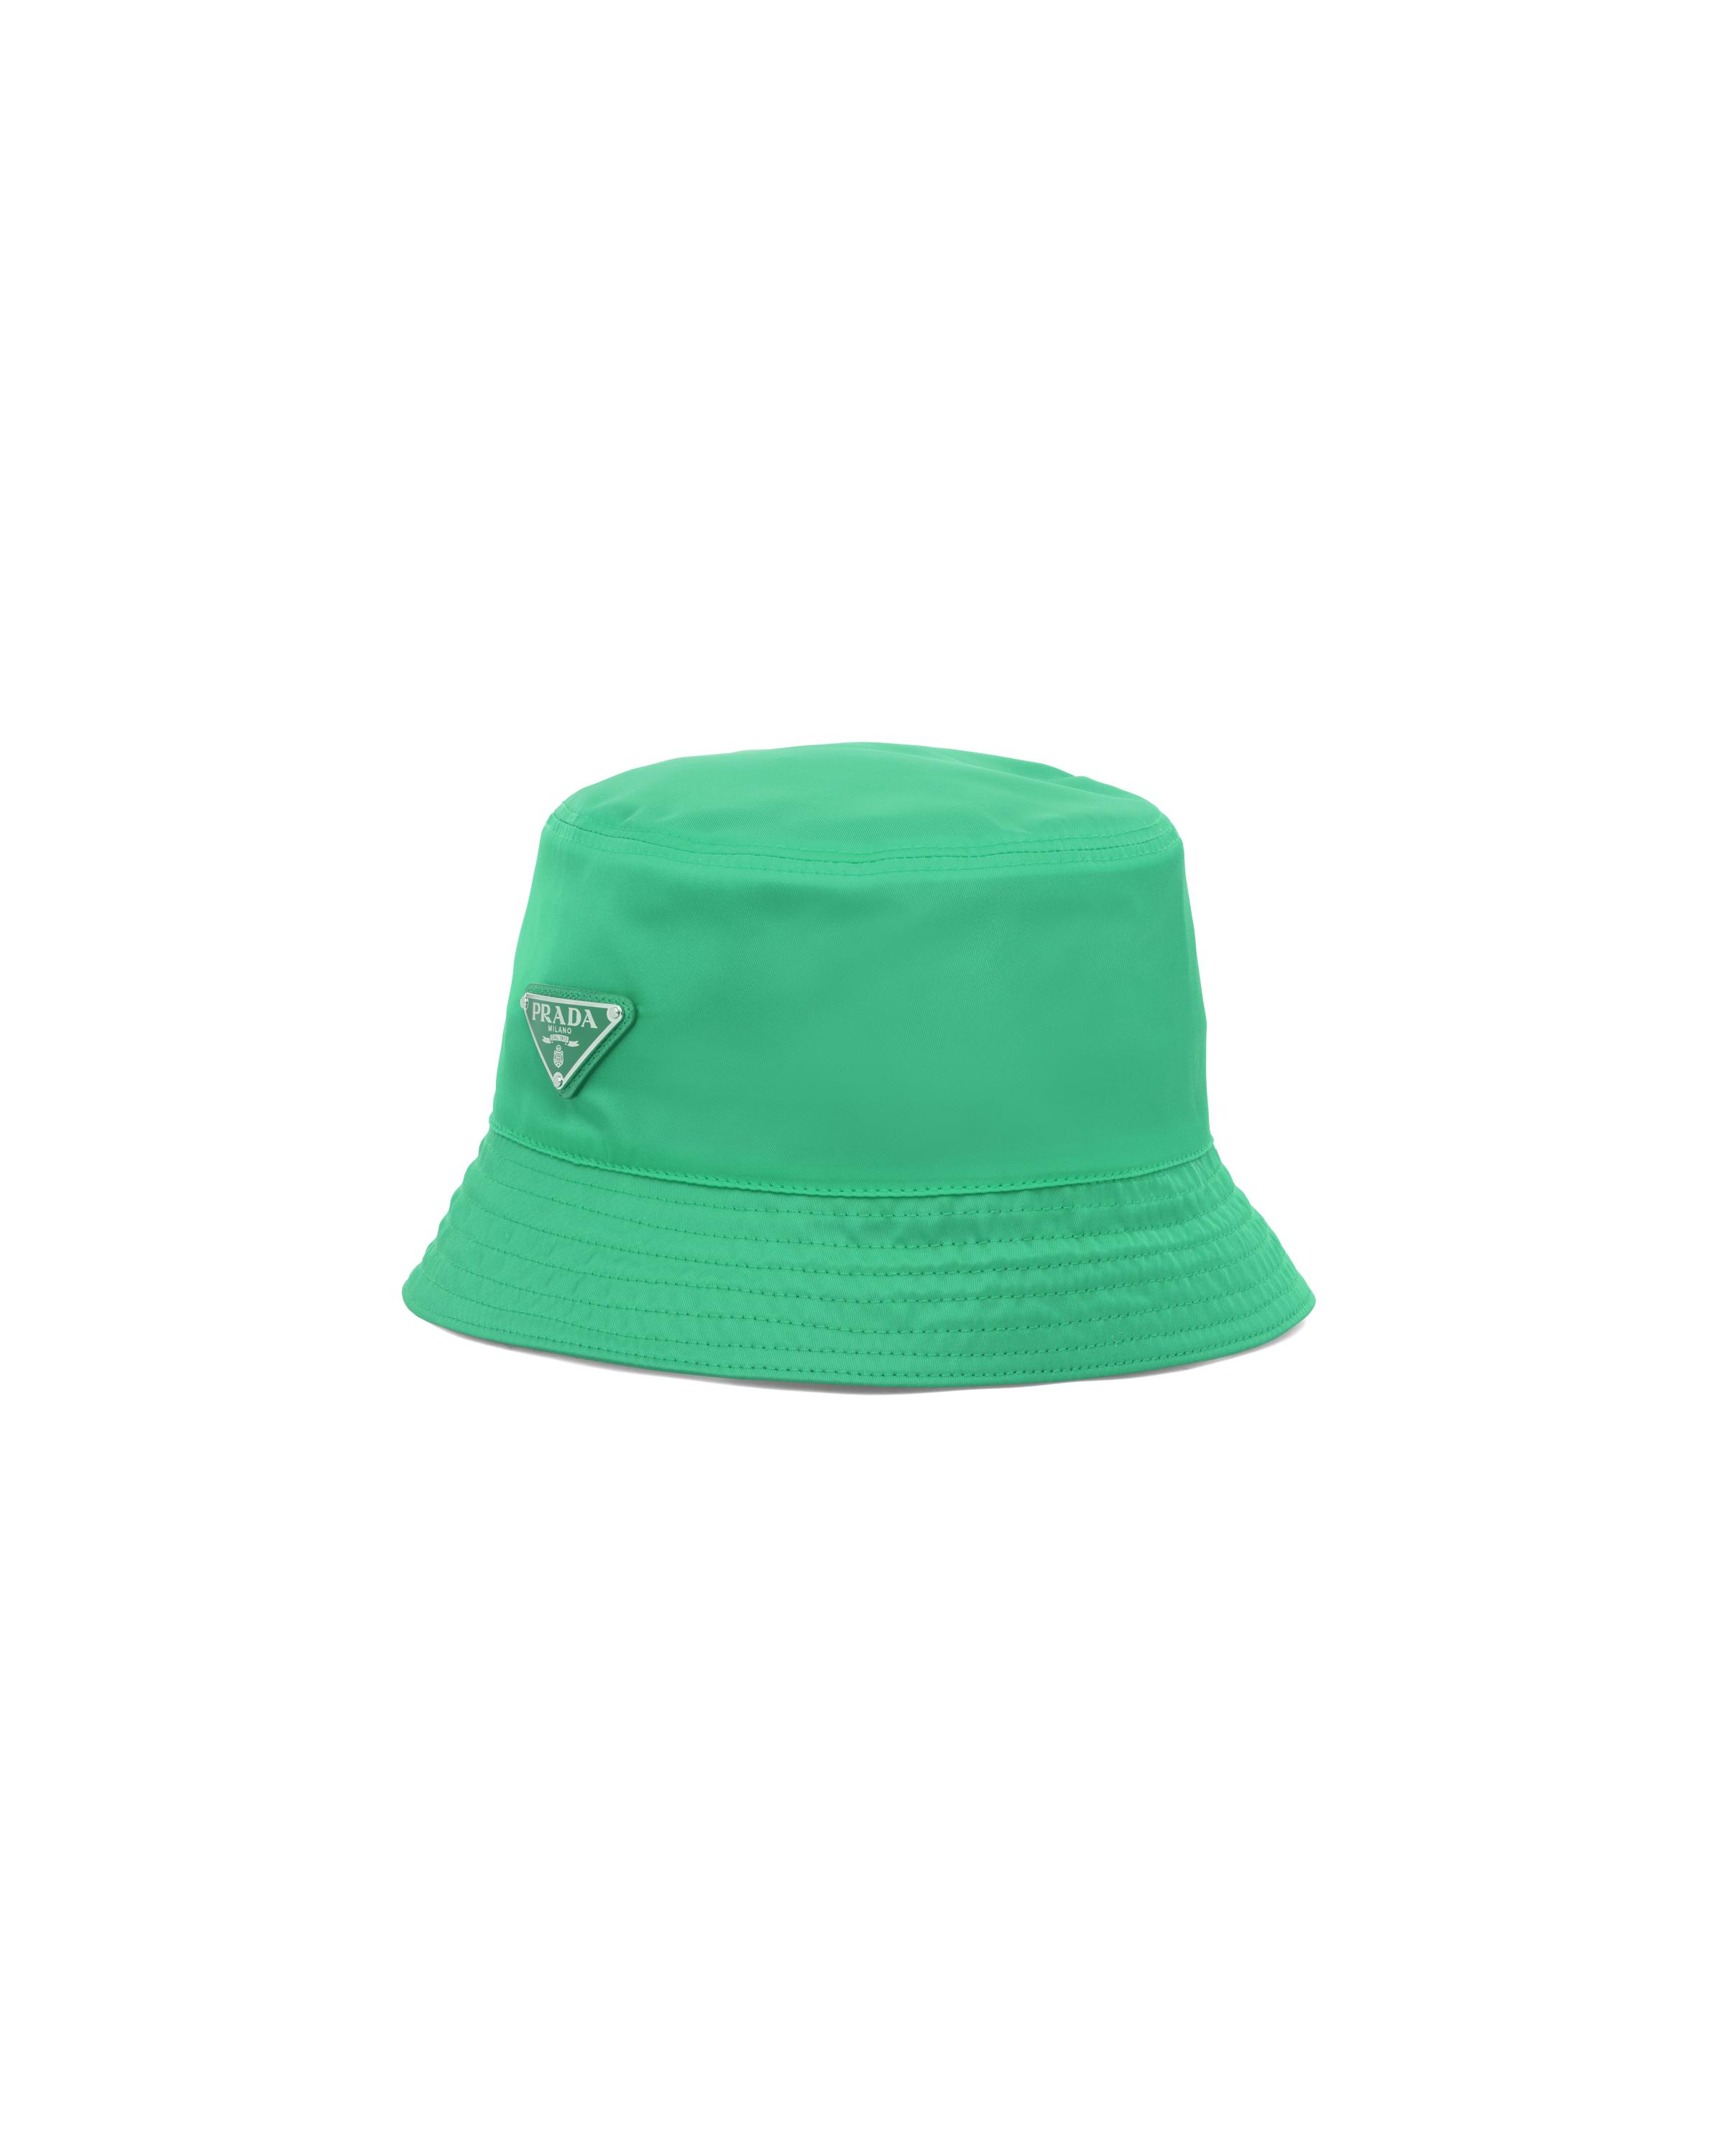 Prada Synthetic Nylon Bucket Hat in Mint Green (Green) for Men - Lyst